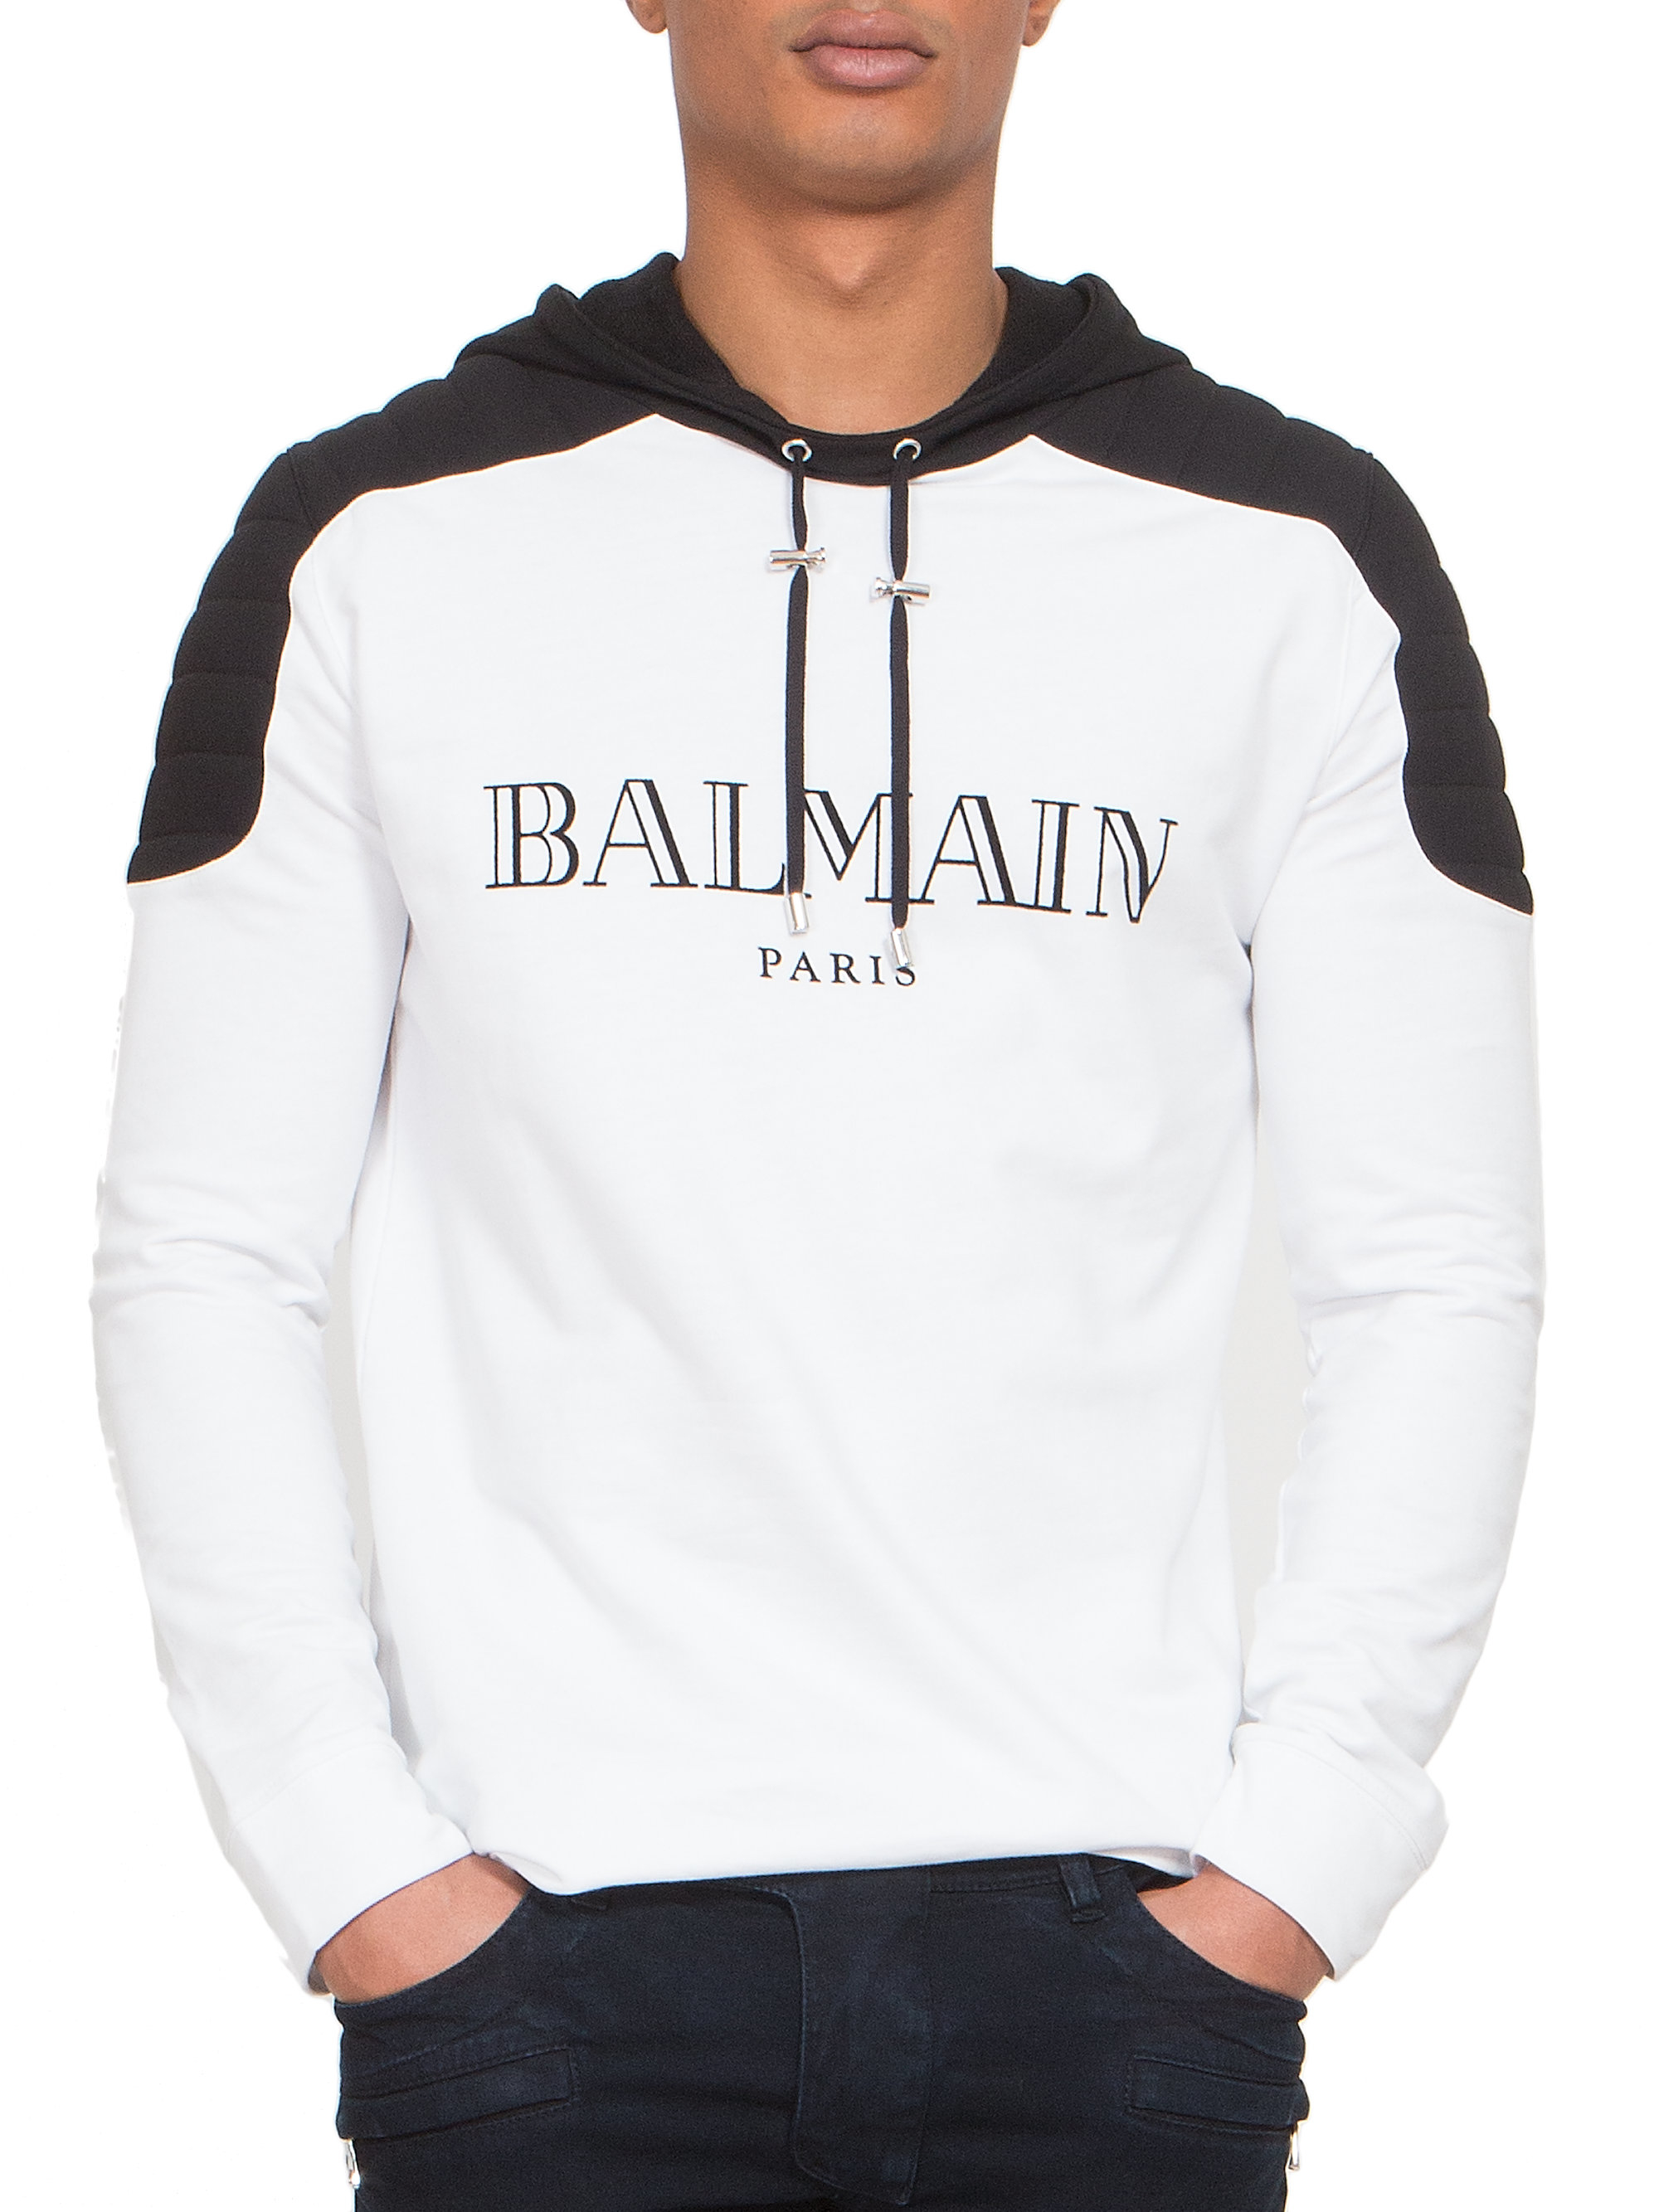 Balmain Quilted Shoulder Logo Hoodie in White-Black (White) for Men - Lyst